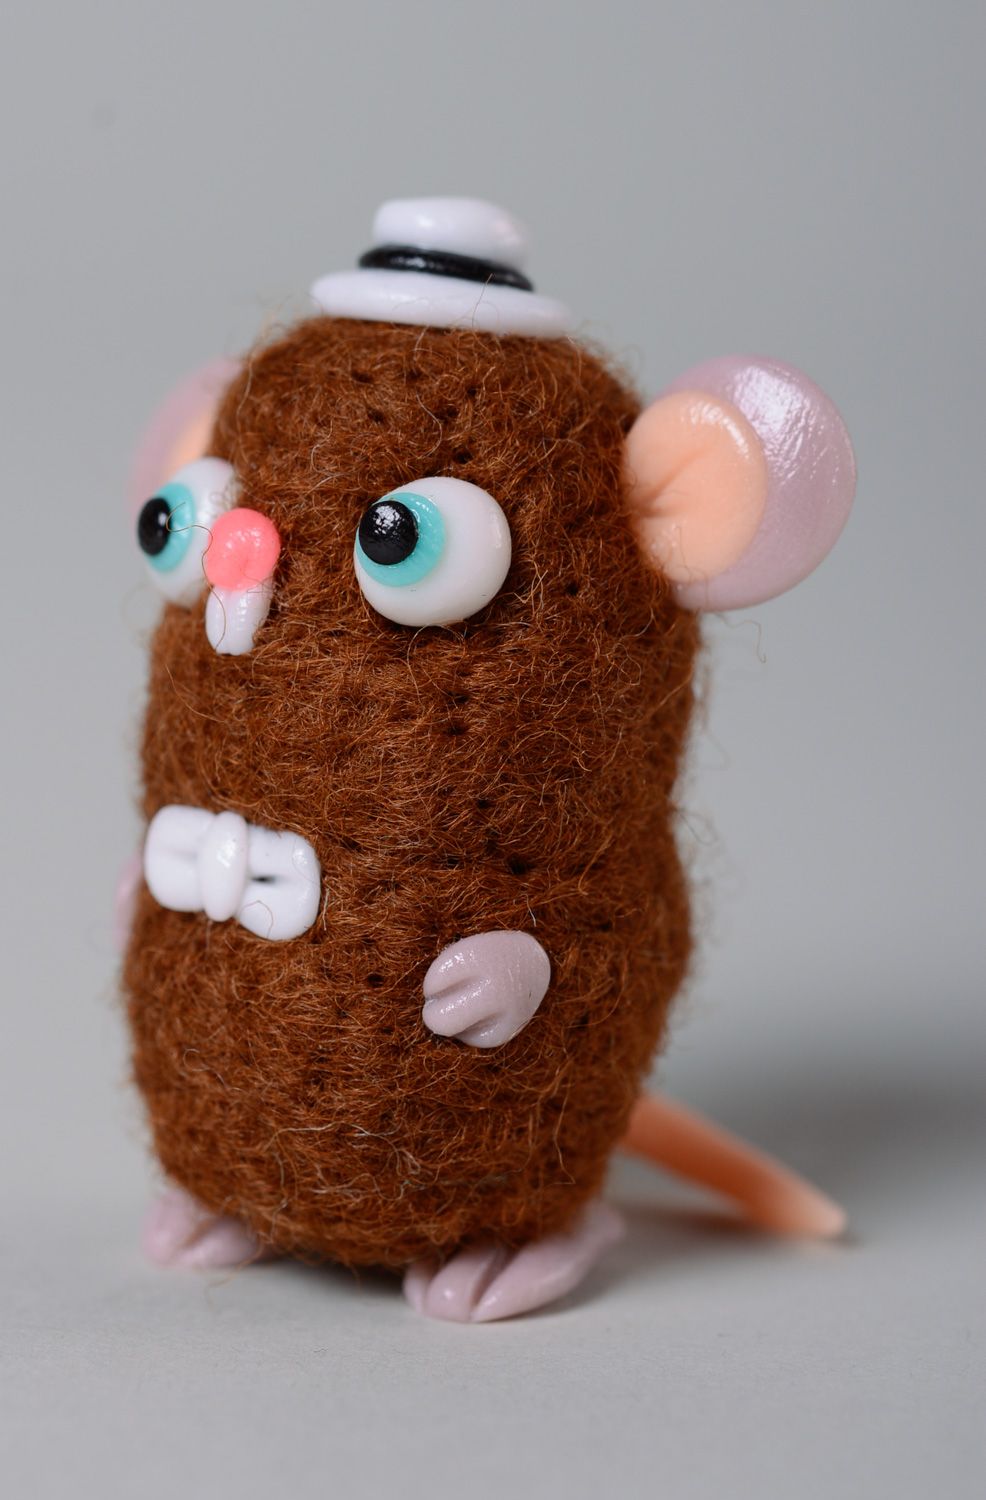 Handmade miniatur Kuscheltier Maus aus Wolle in Trockenfilzen Technik foto 2